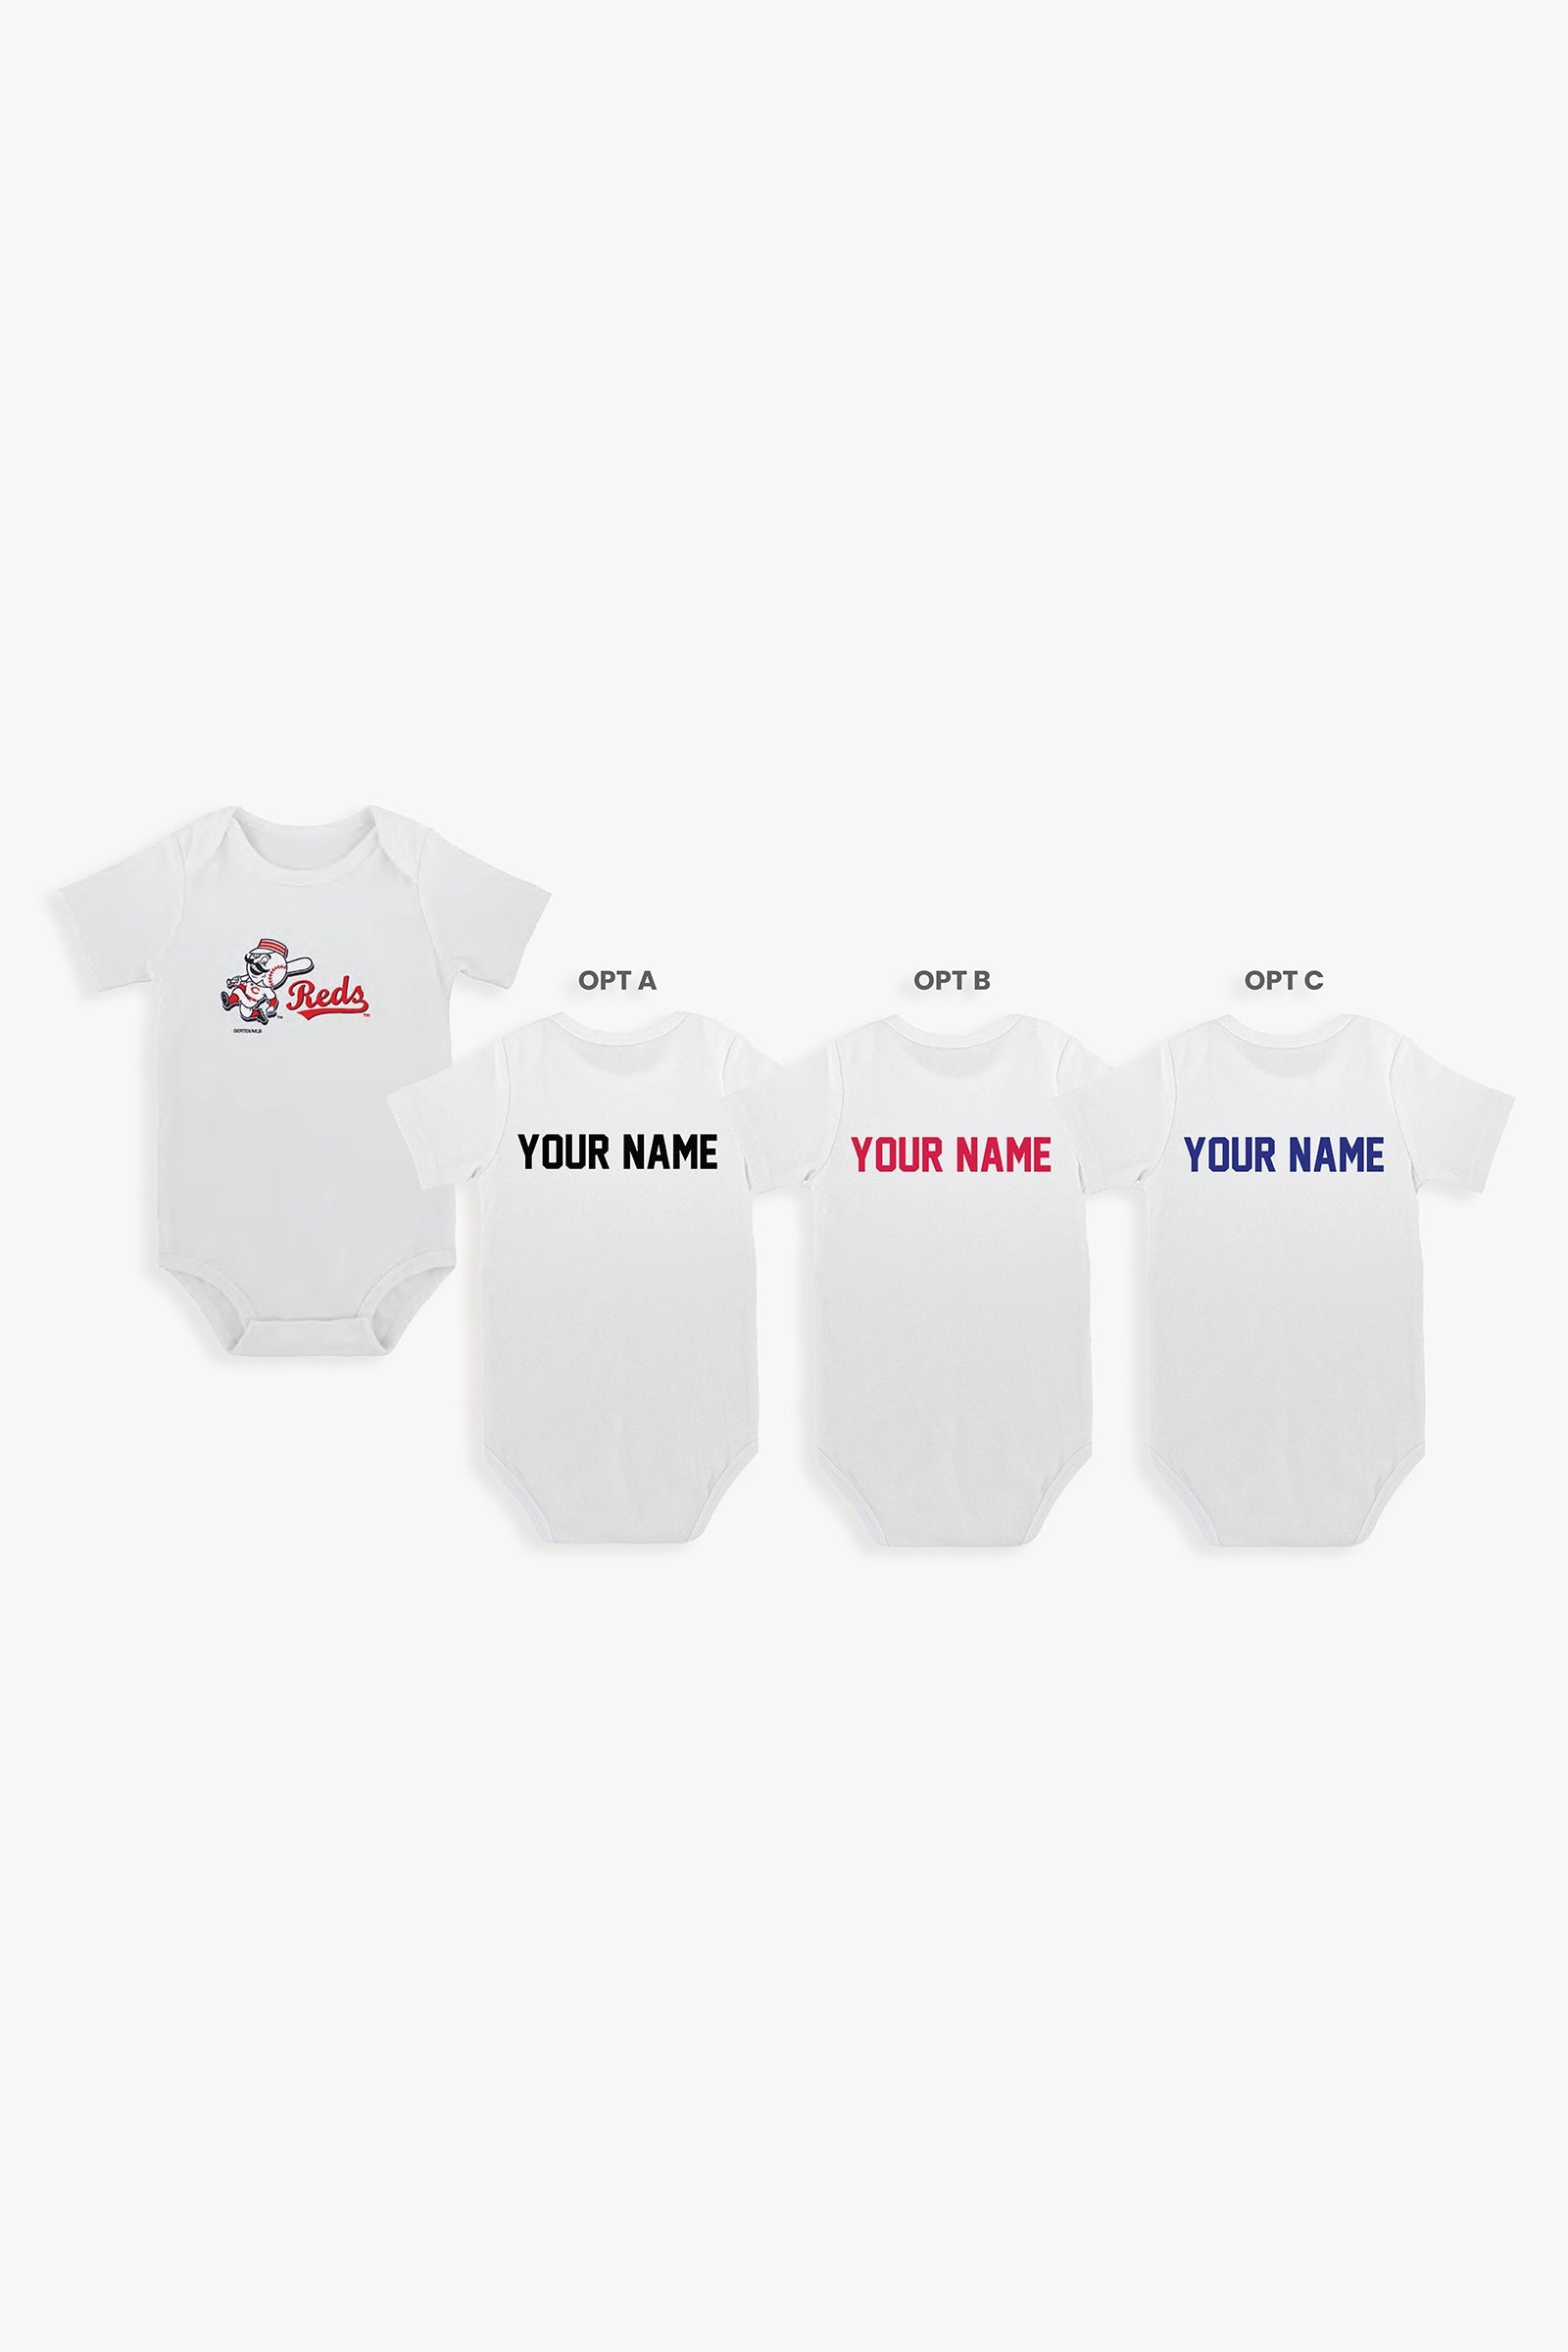 Customizable MLB Baby Bodysuit in White (3-6 Months)